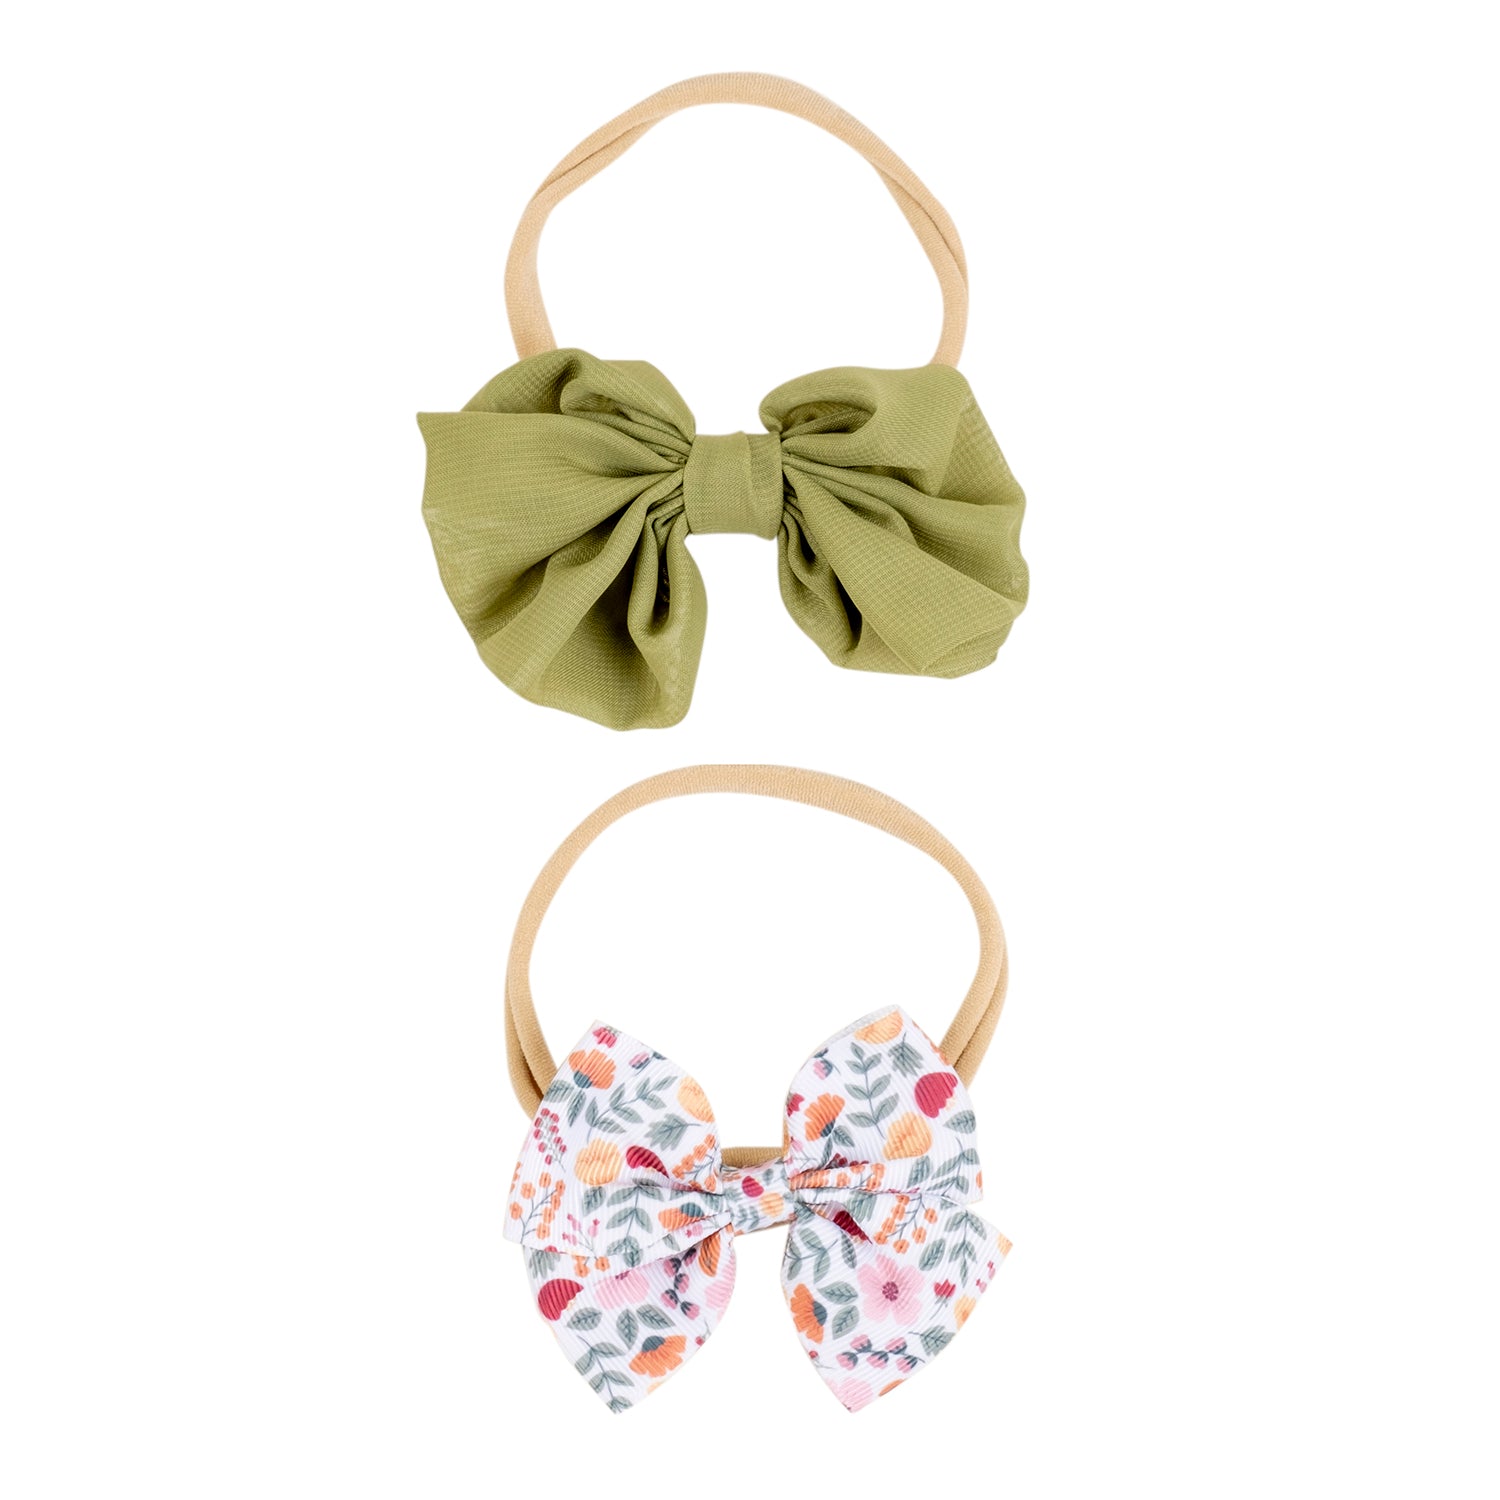 Baby Moo Fall Botanical Infant Girl 4-Piece Gift Hairband And Socks Set - Green